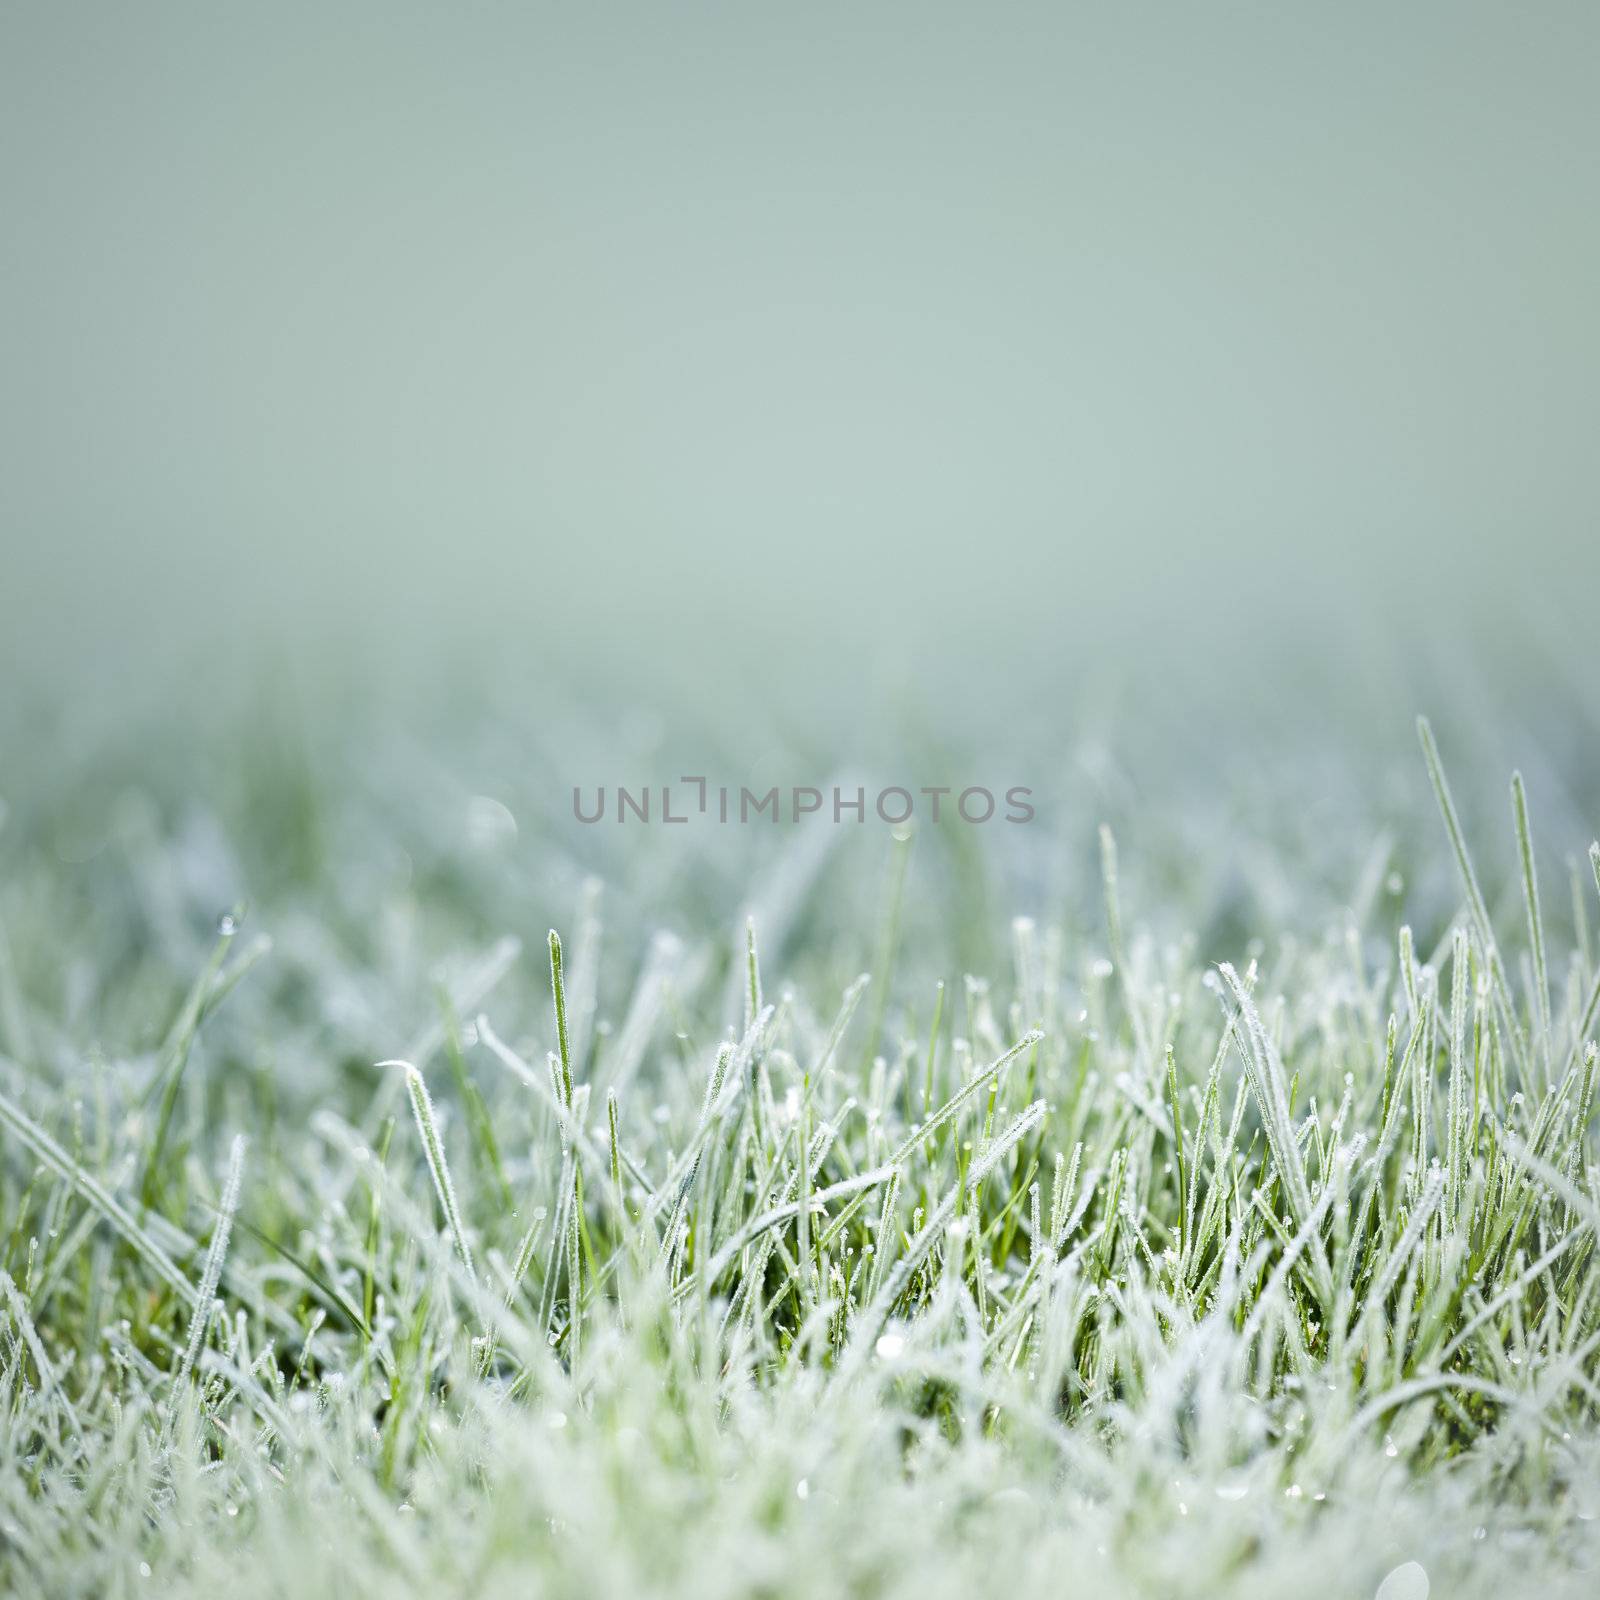 An image of an autumn icy grass